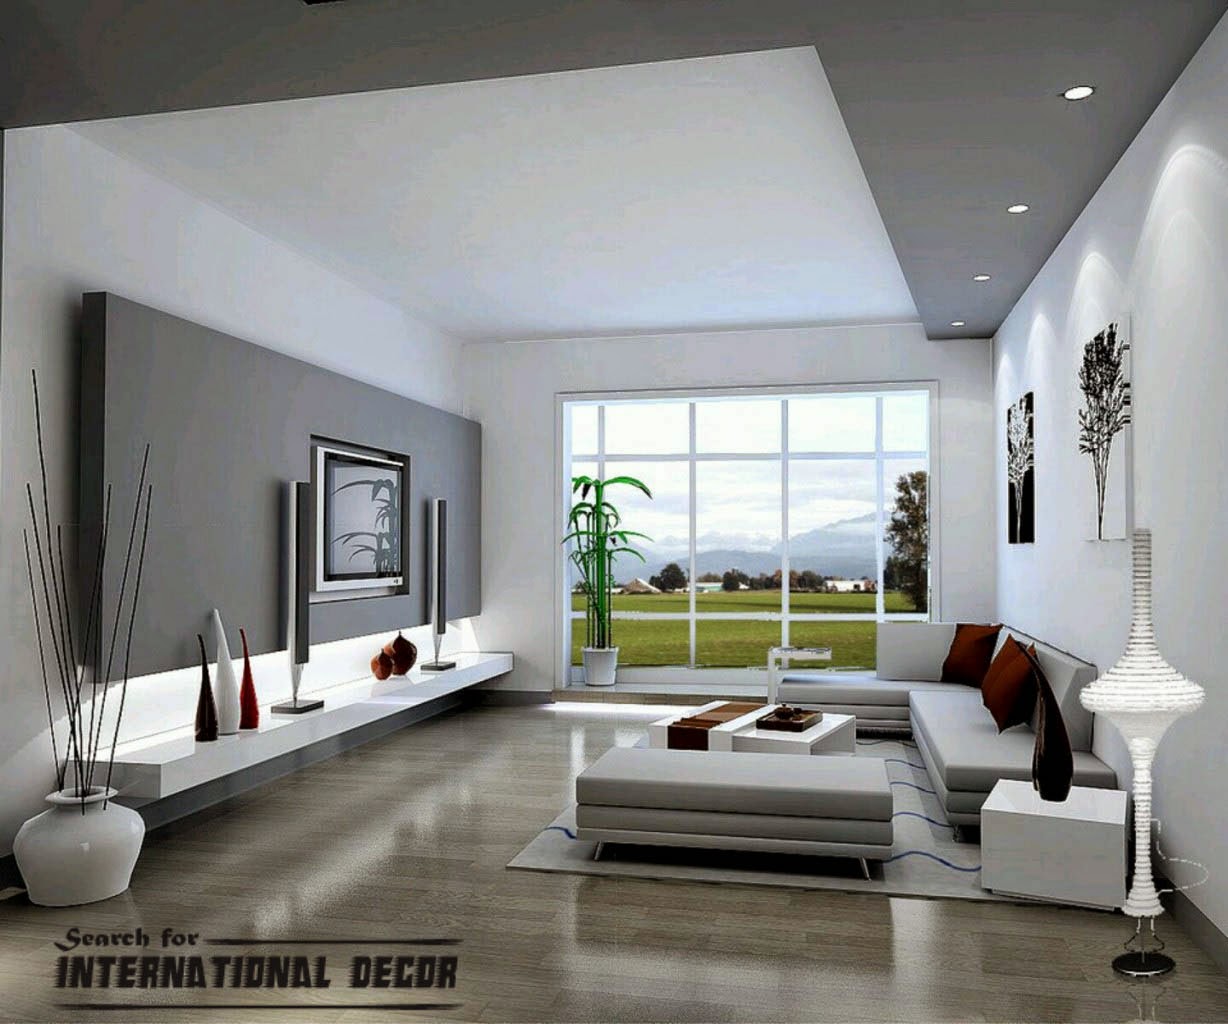 5 Ways to make modern home decor and design